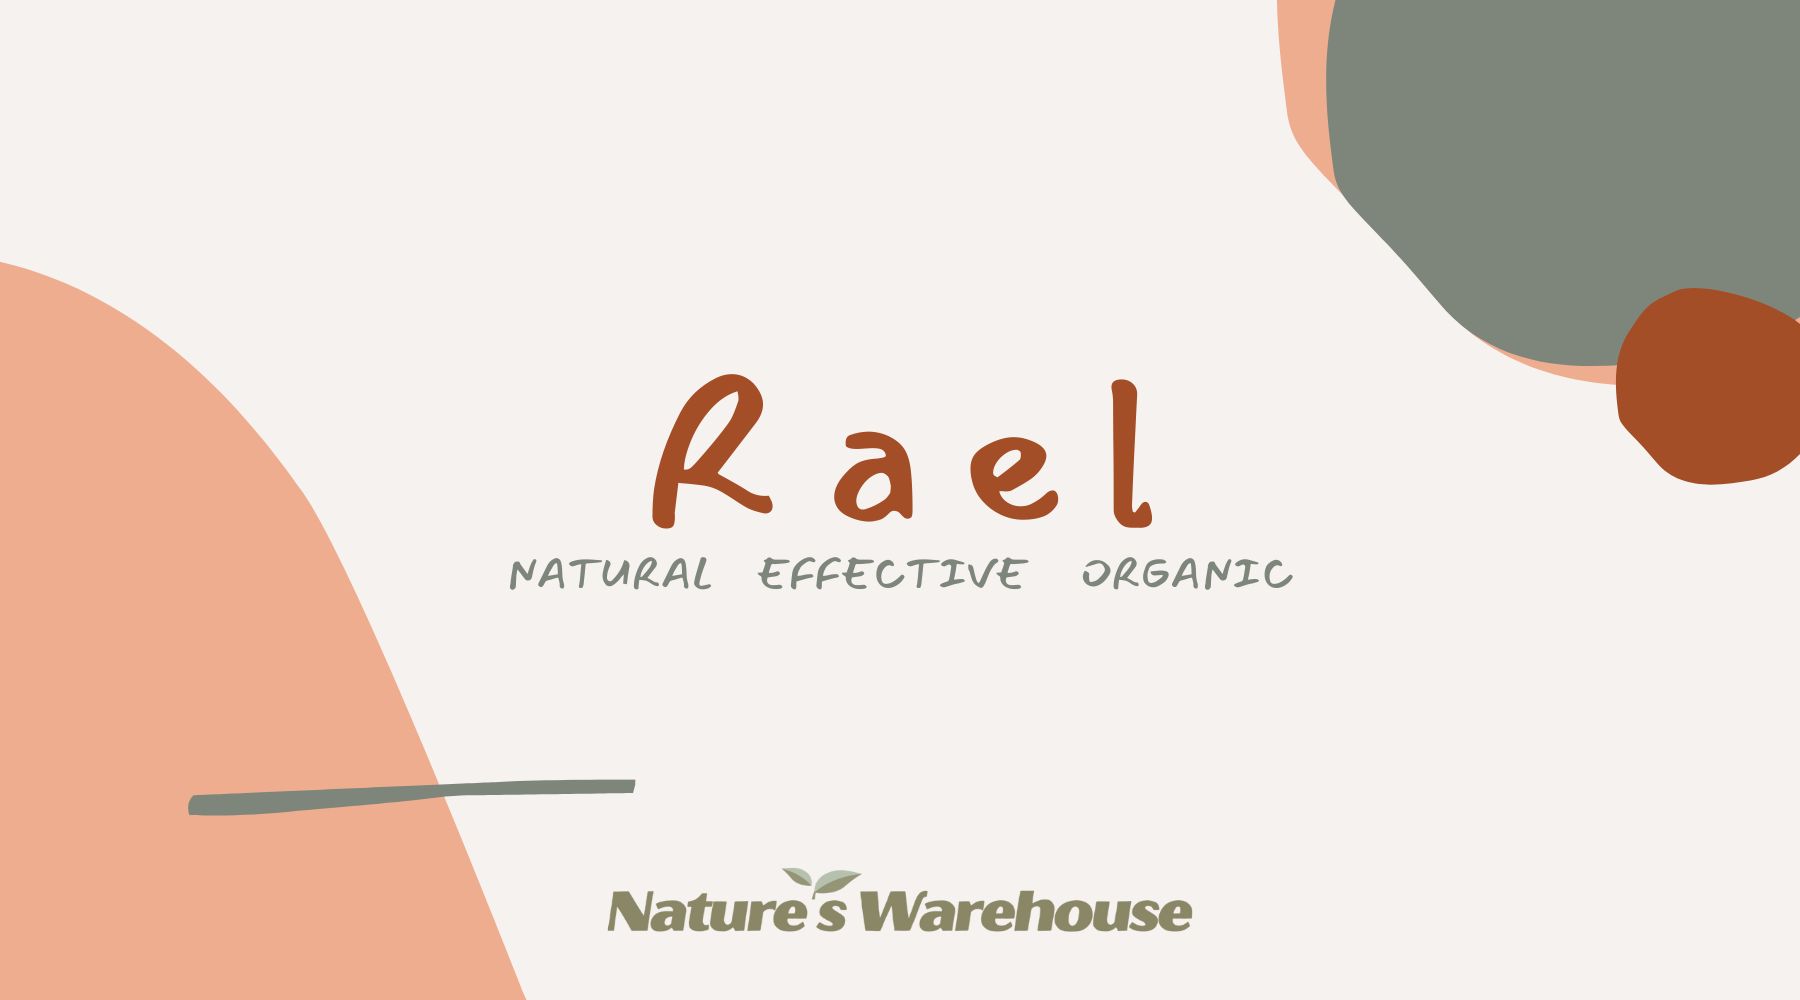 Rael - Natural, Effective, Organic